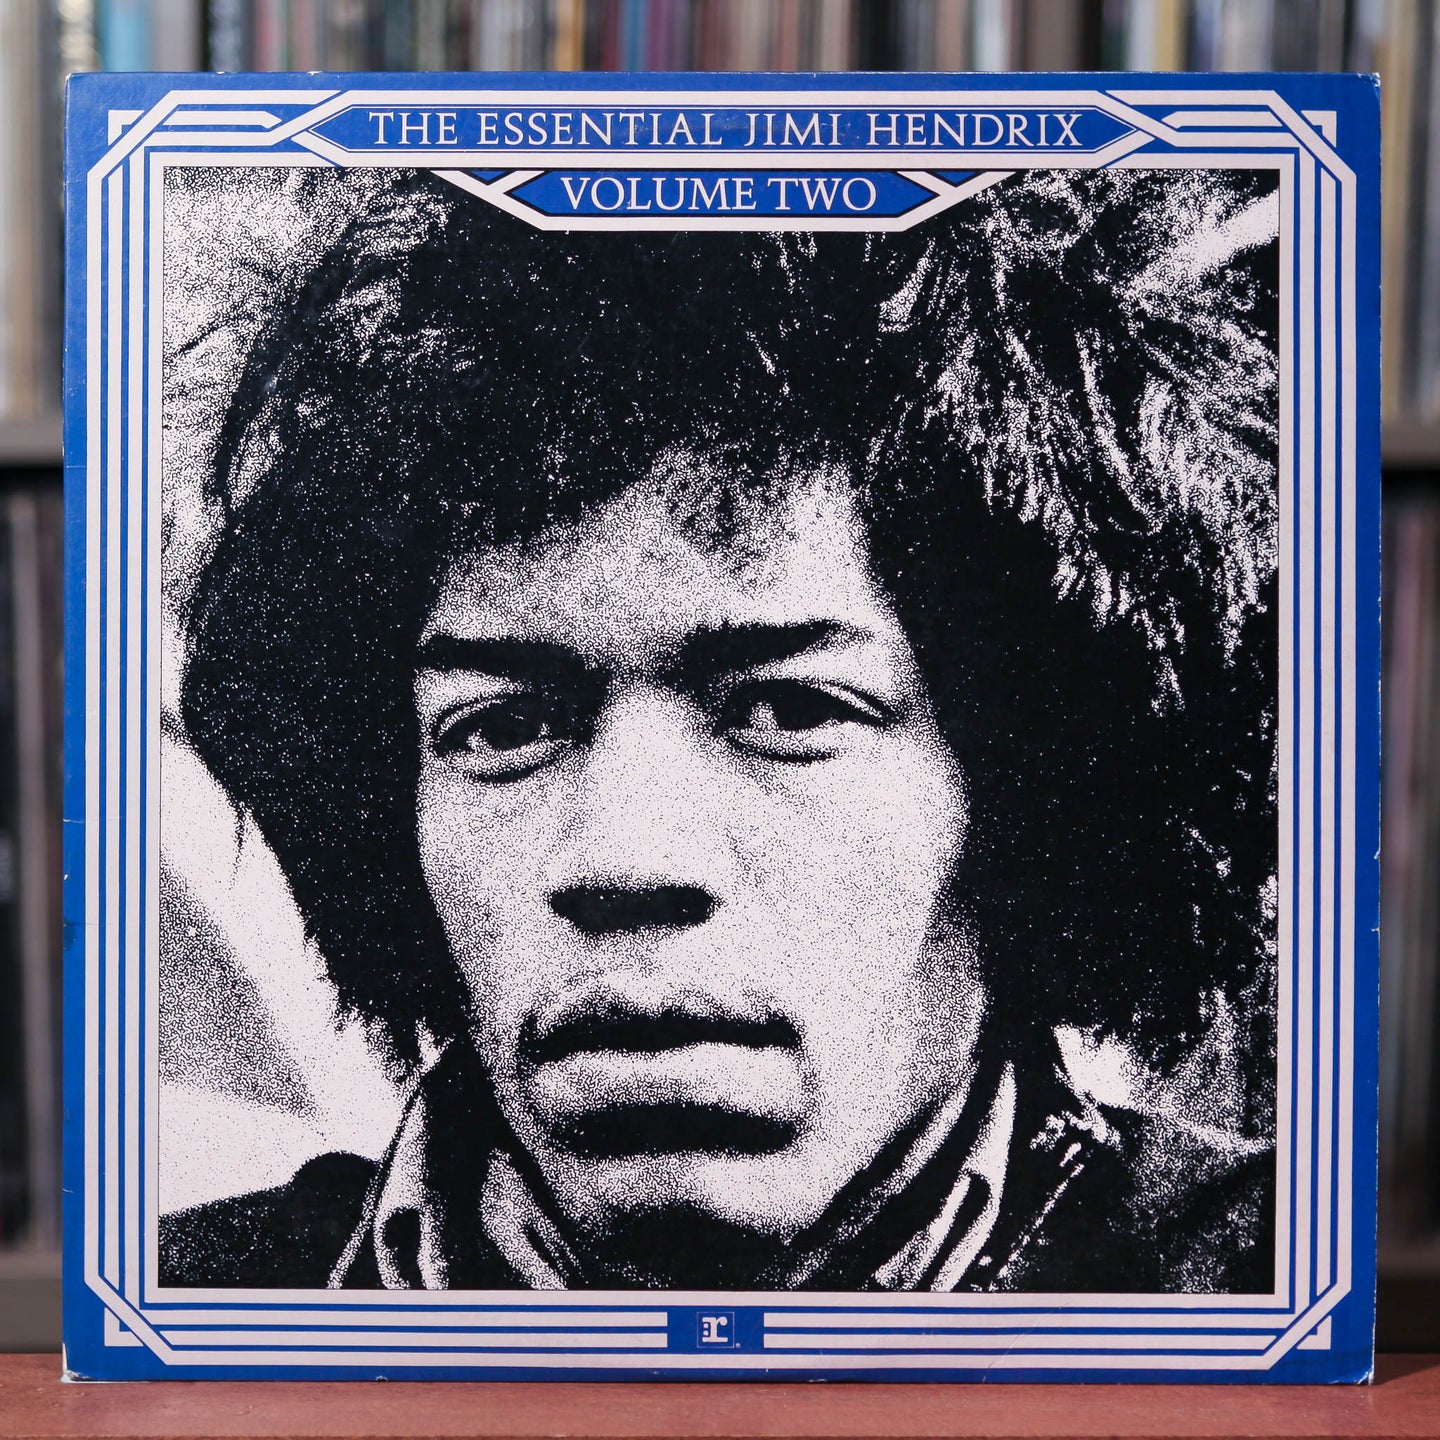 Jimi Hendrix - The Essential Jimi Hendrix (Volume Two) - 1979 Reprise, VG+/VG w/7